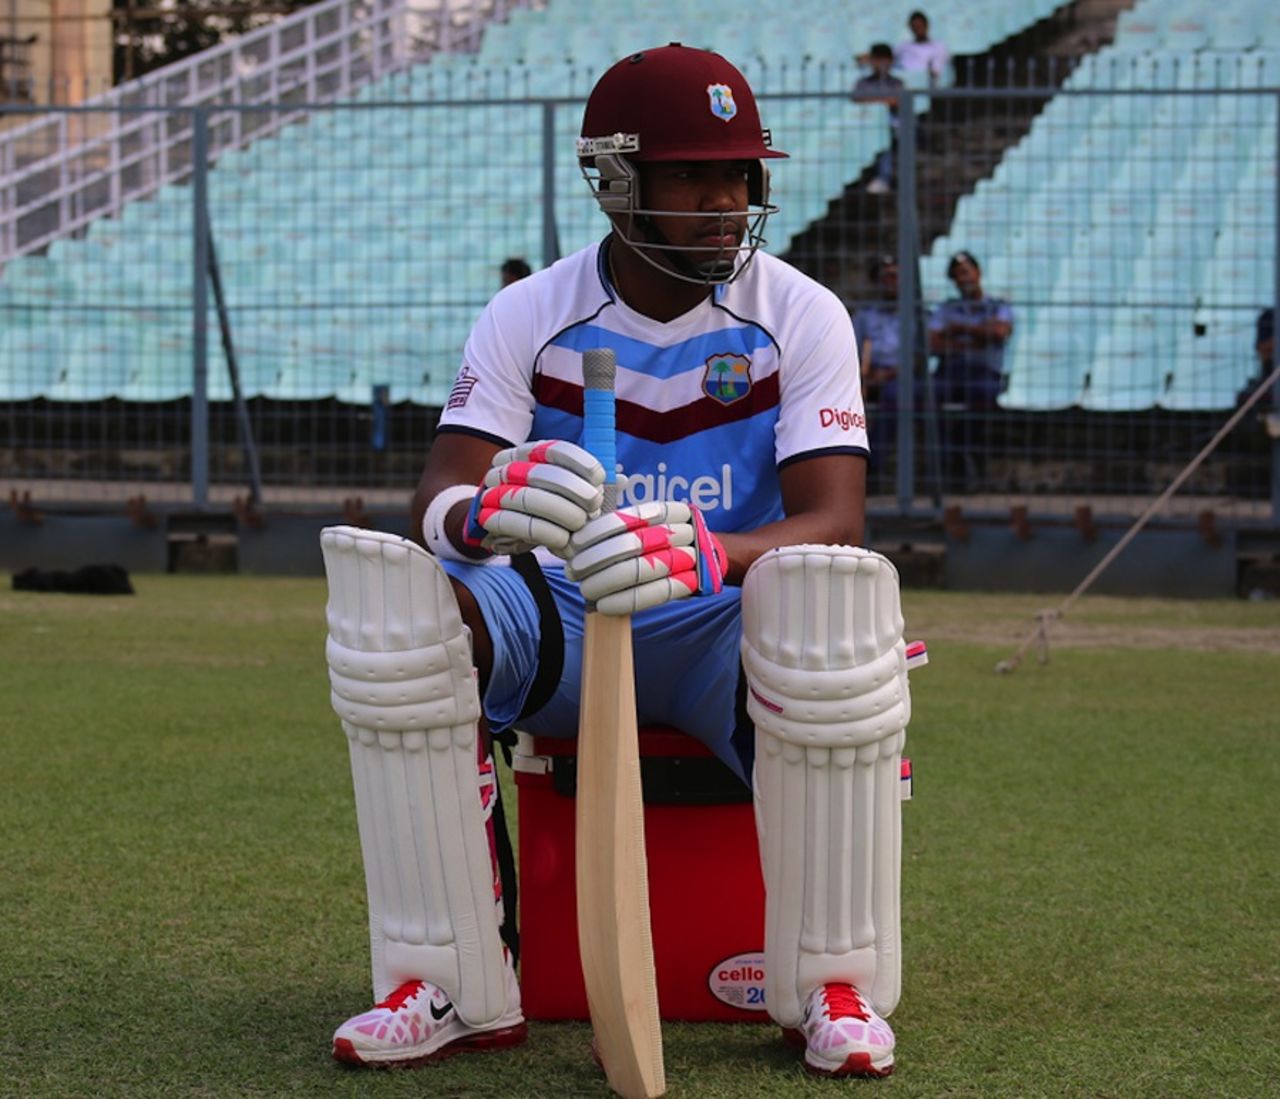 Darren Bravo awaits his turn to bat, Kolkata, November 4, 2013